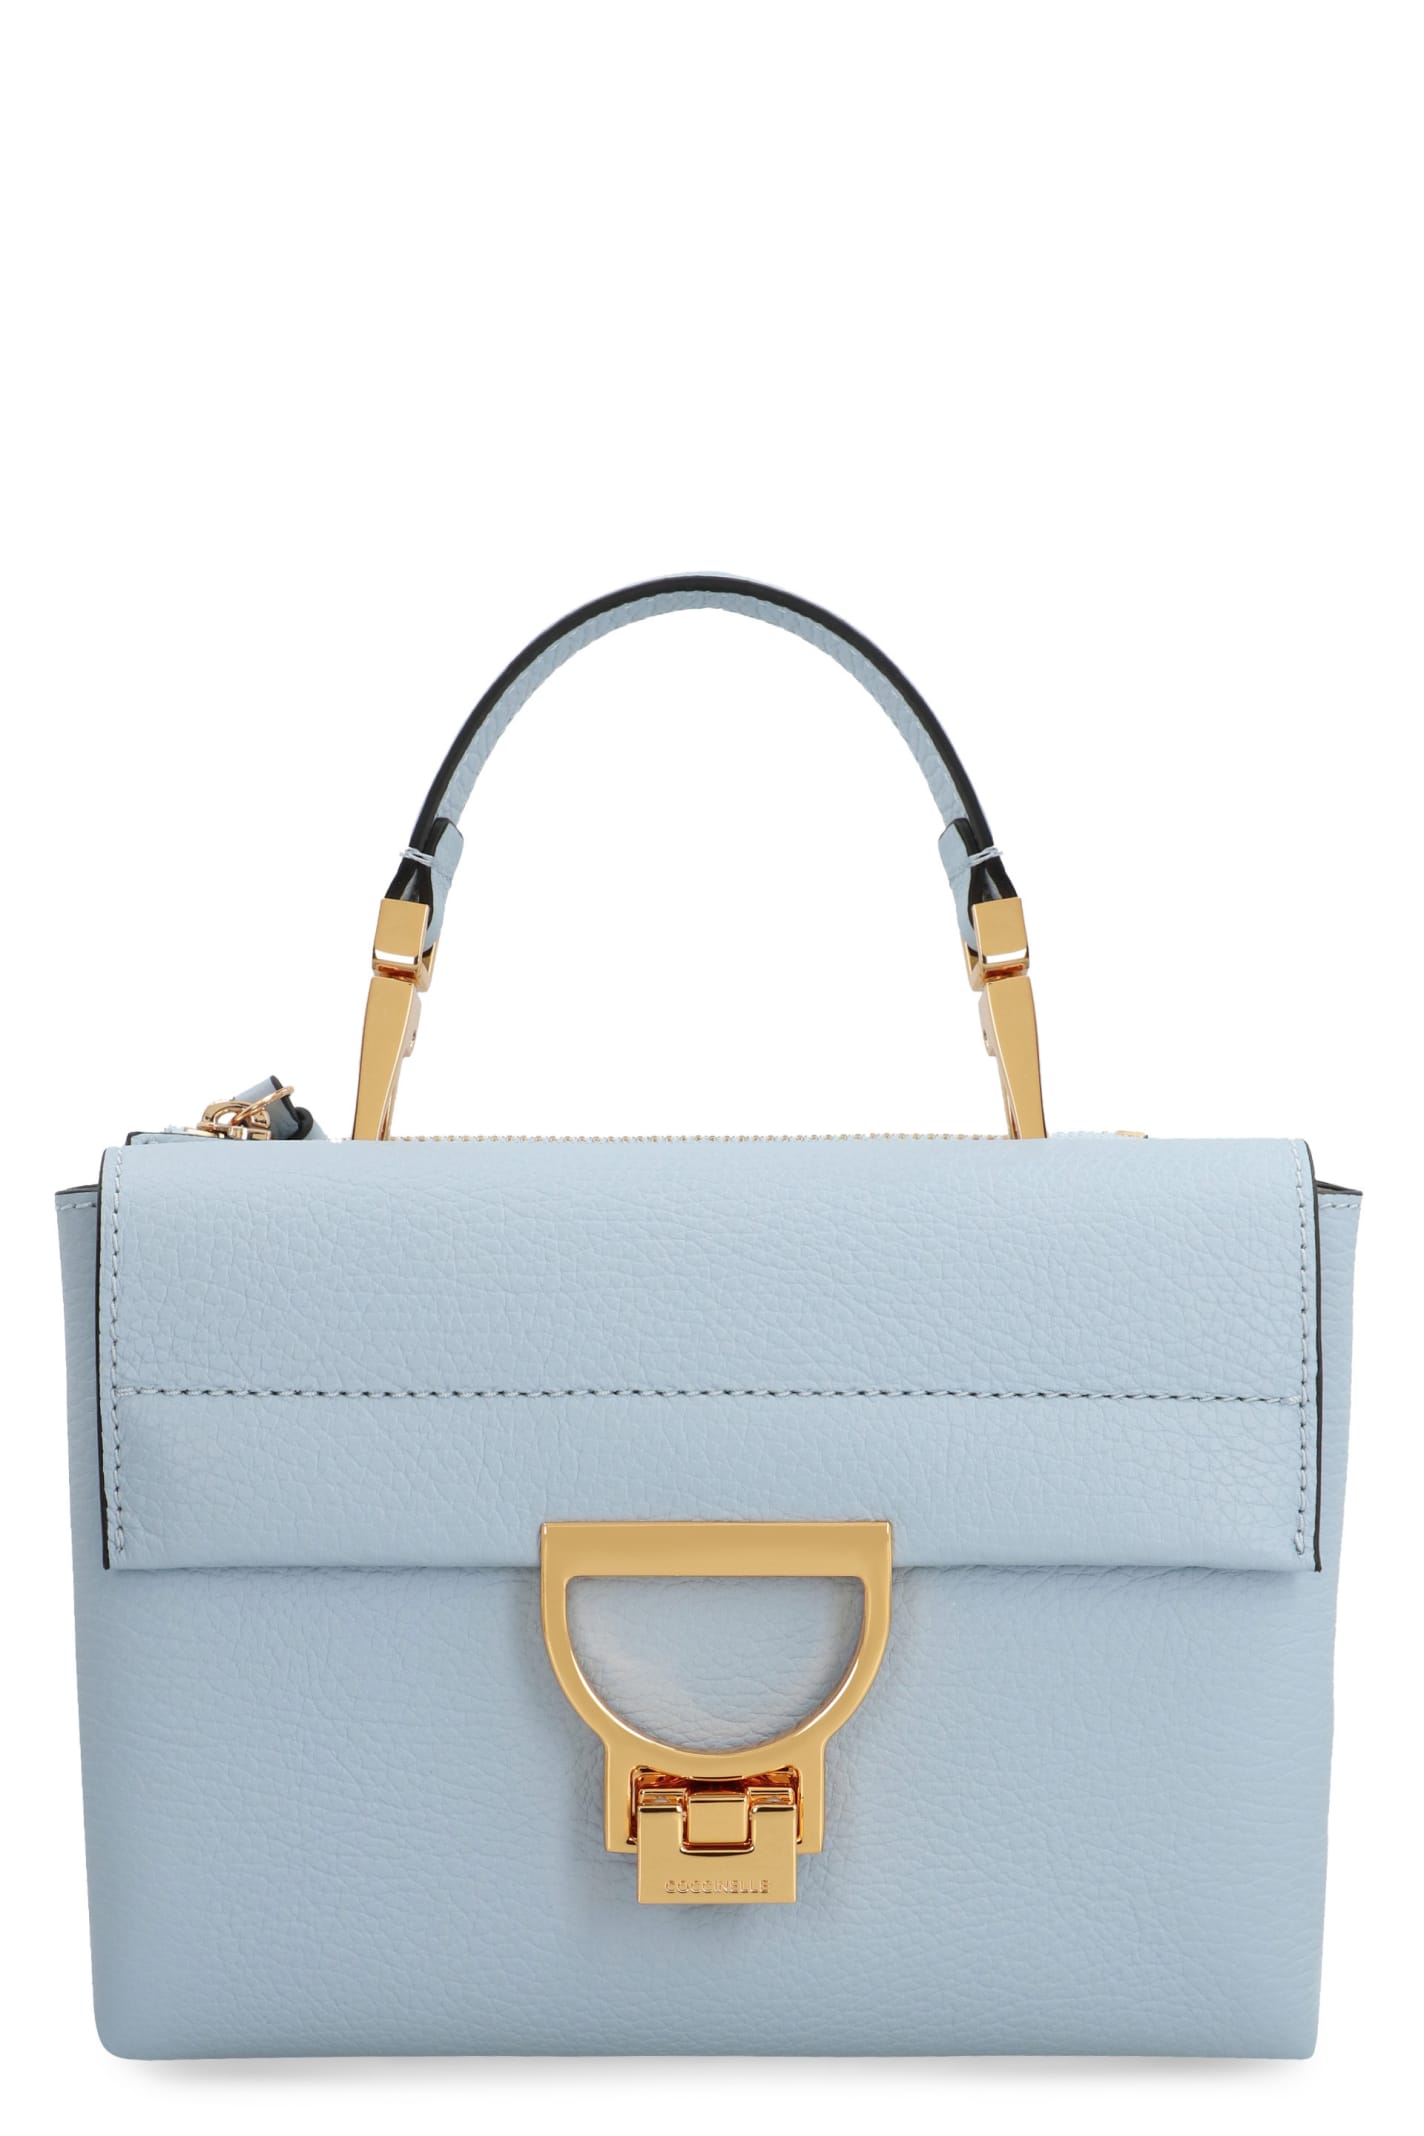 Coccinelle Arlettis Leather Handbag In Light Blue